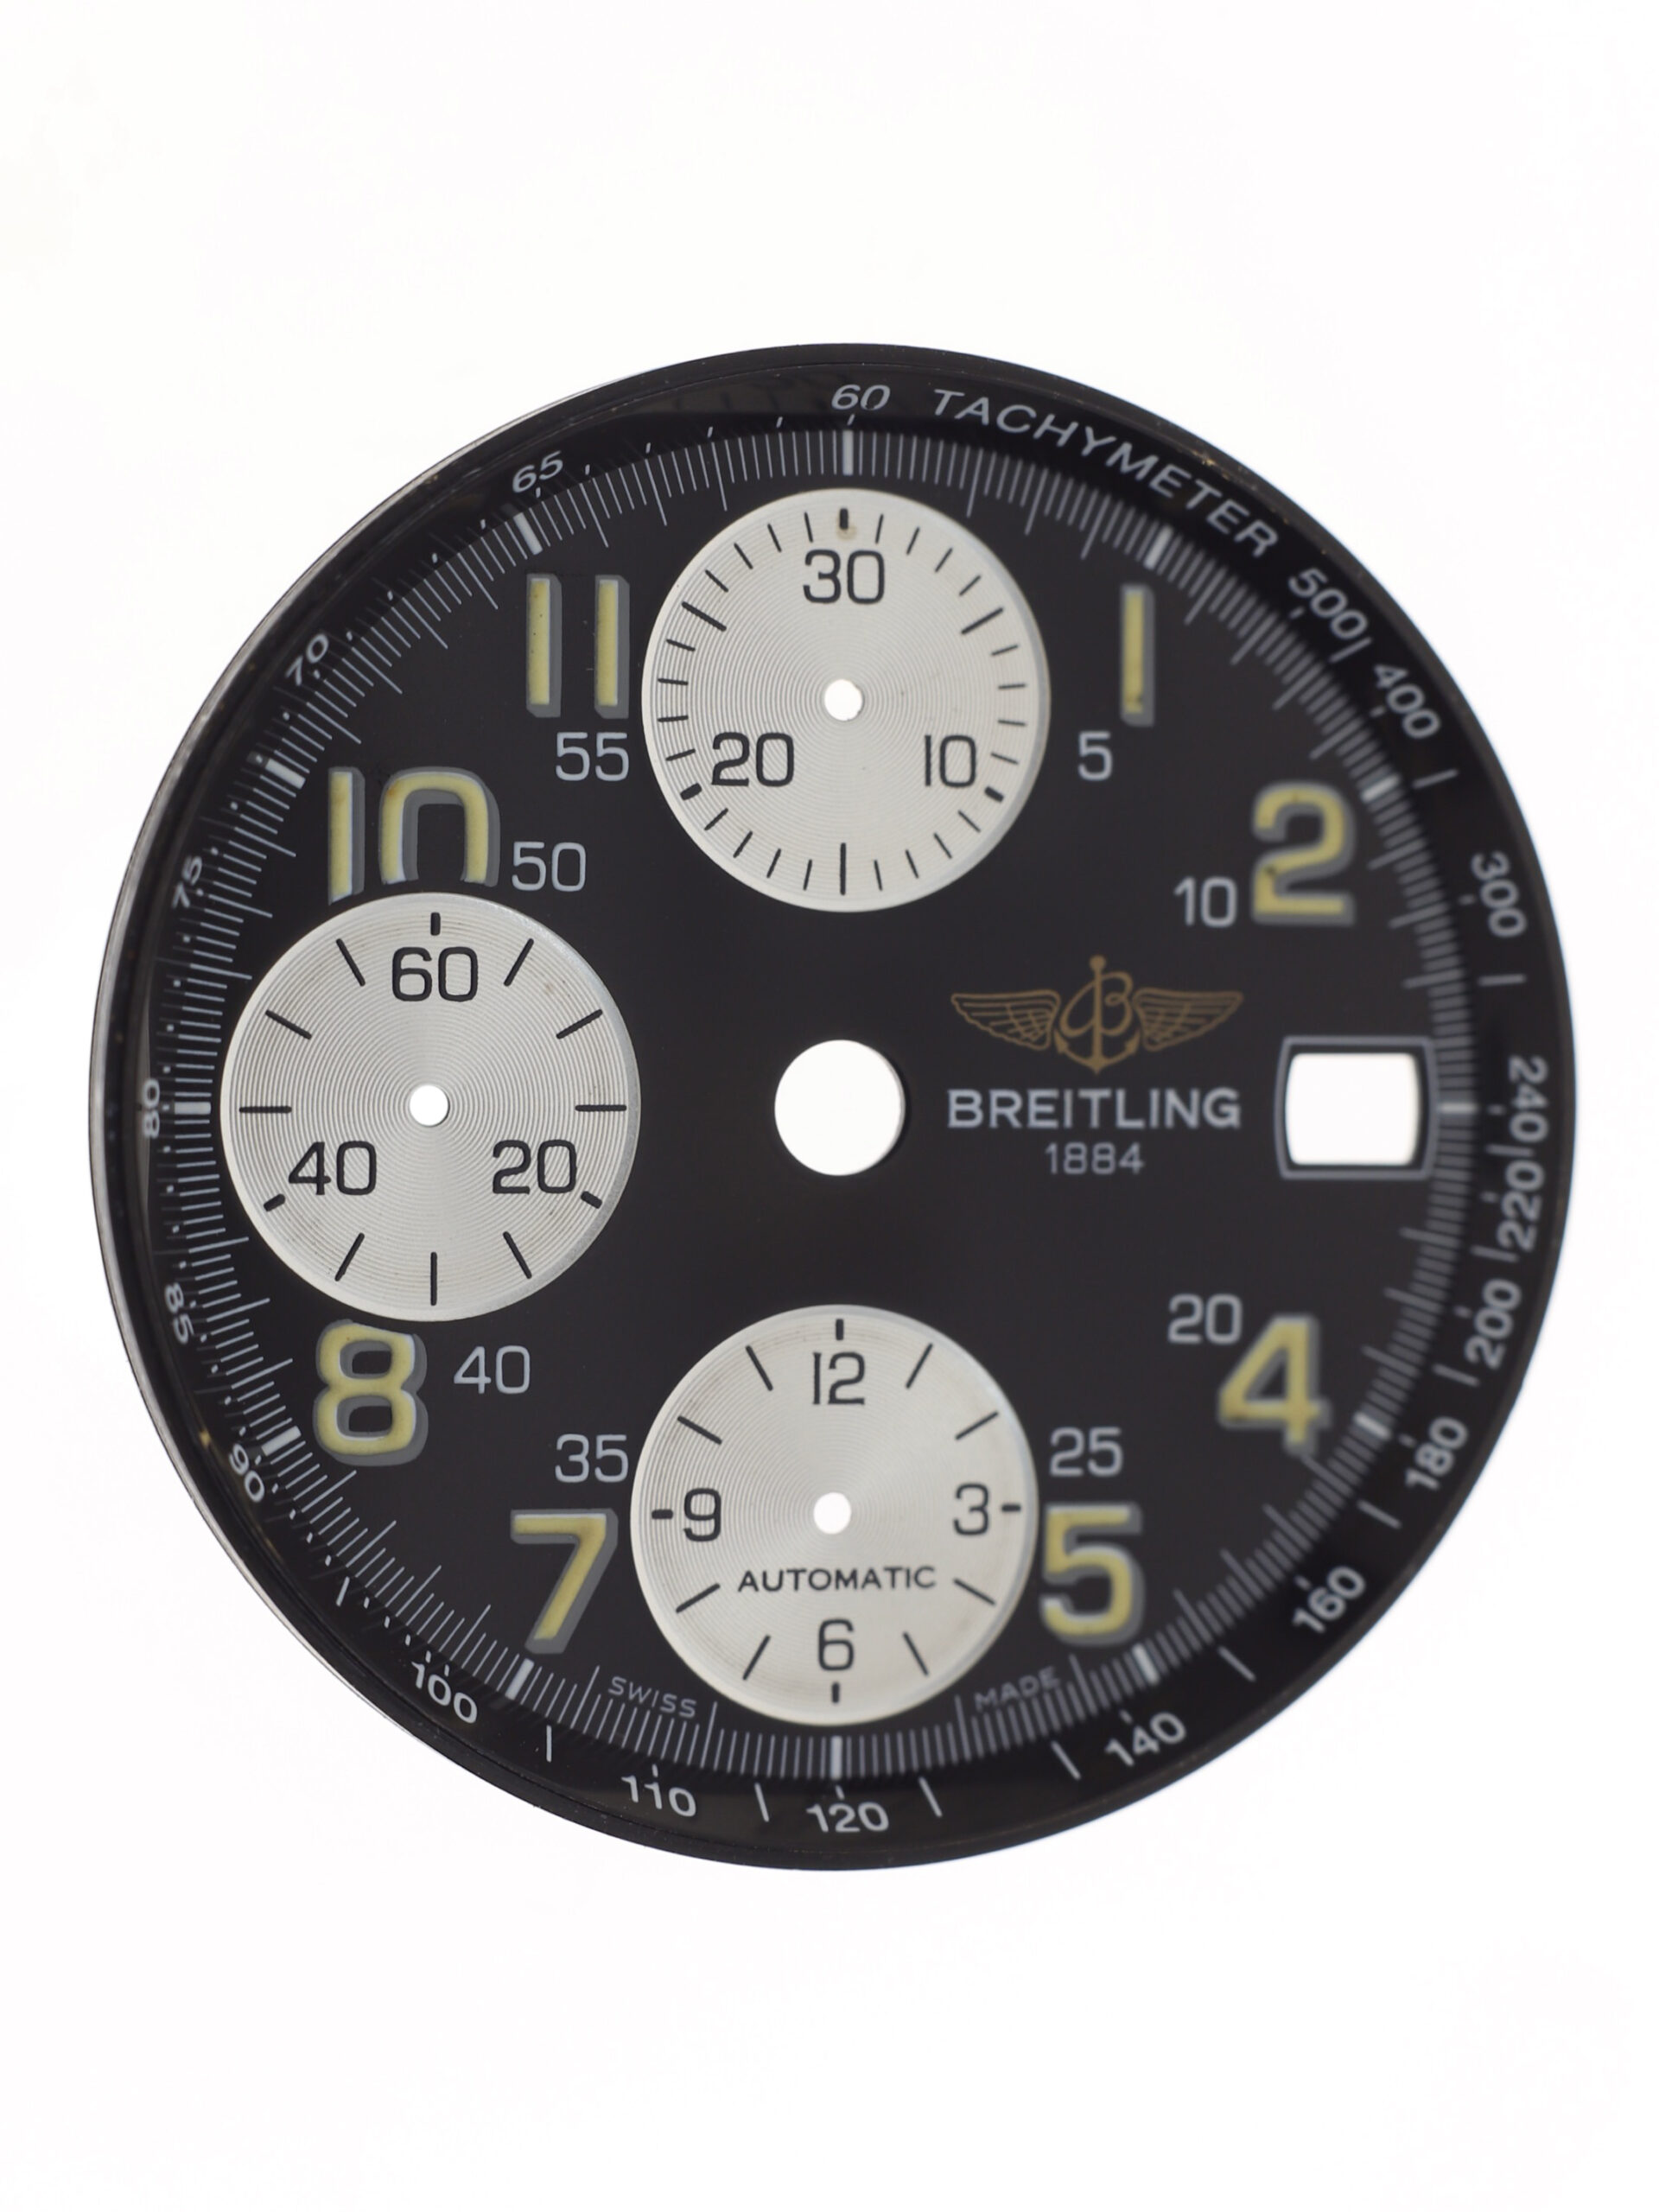 Breitling Chronograph Ref. B219 1990s - Gisbert A. Joseph Watches